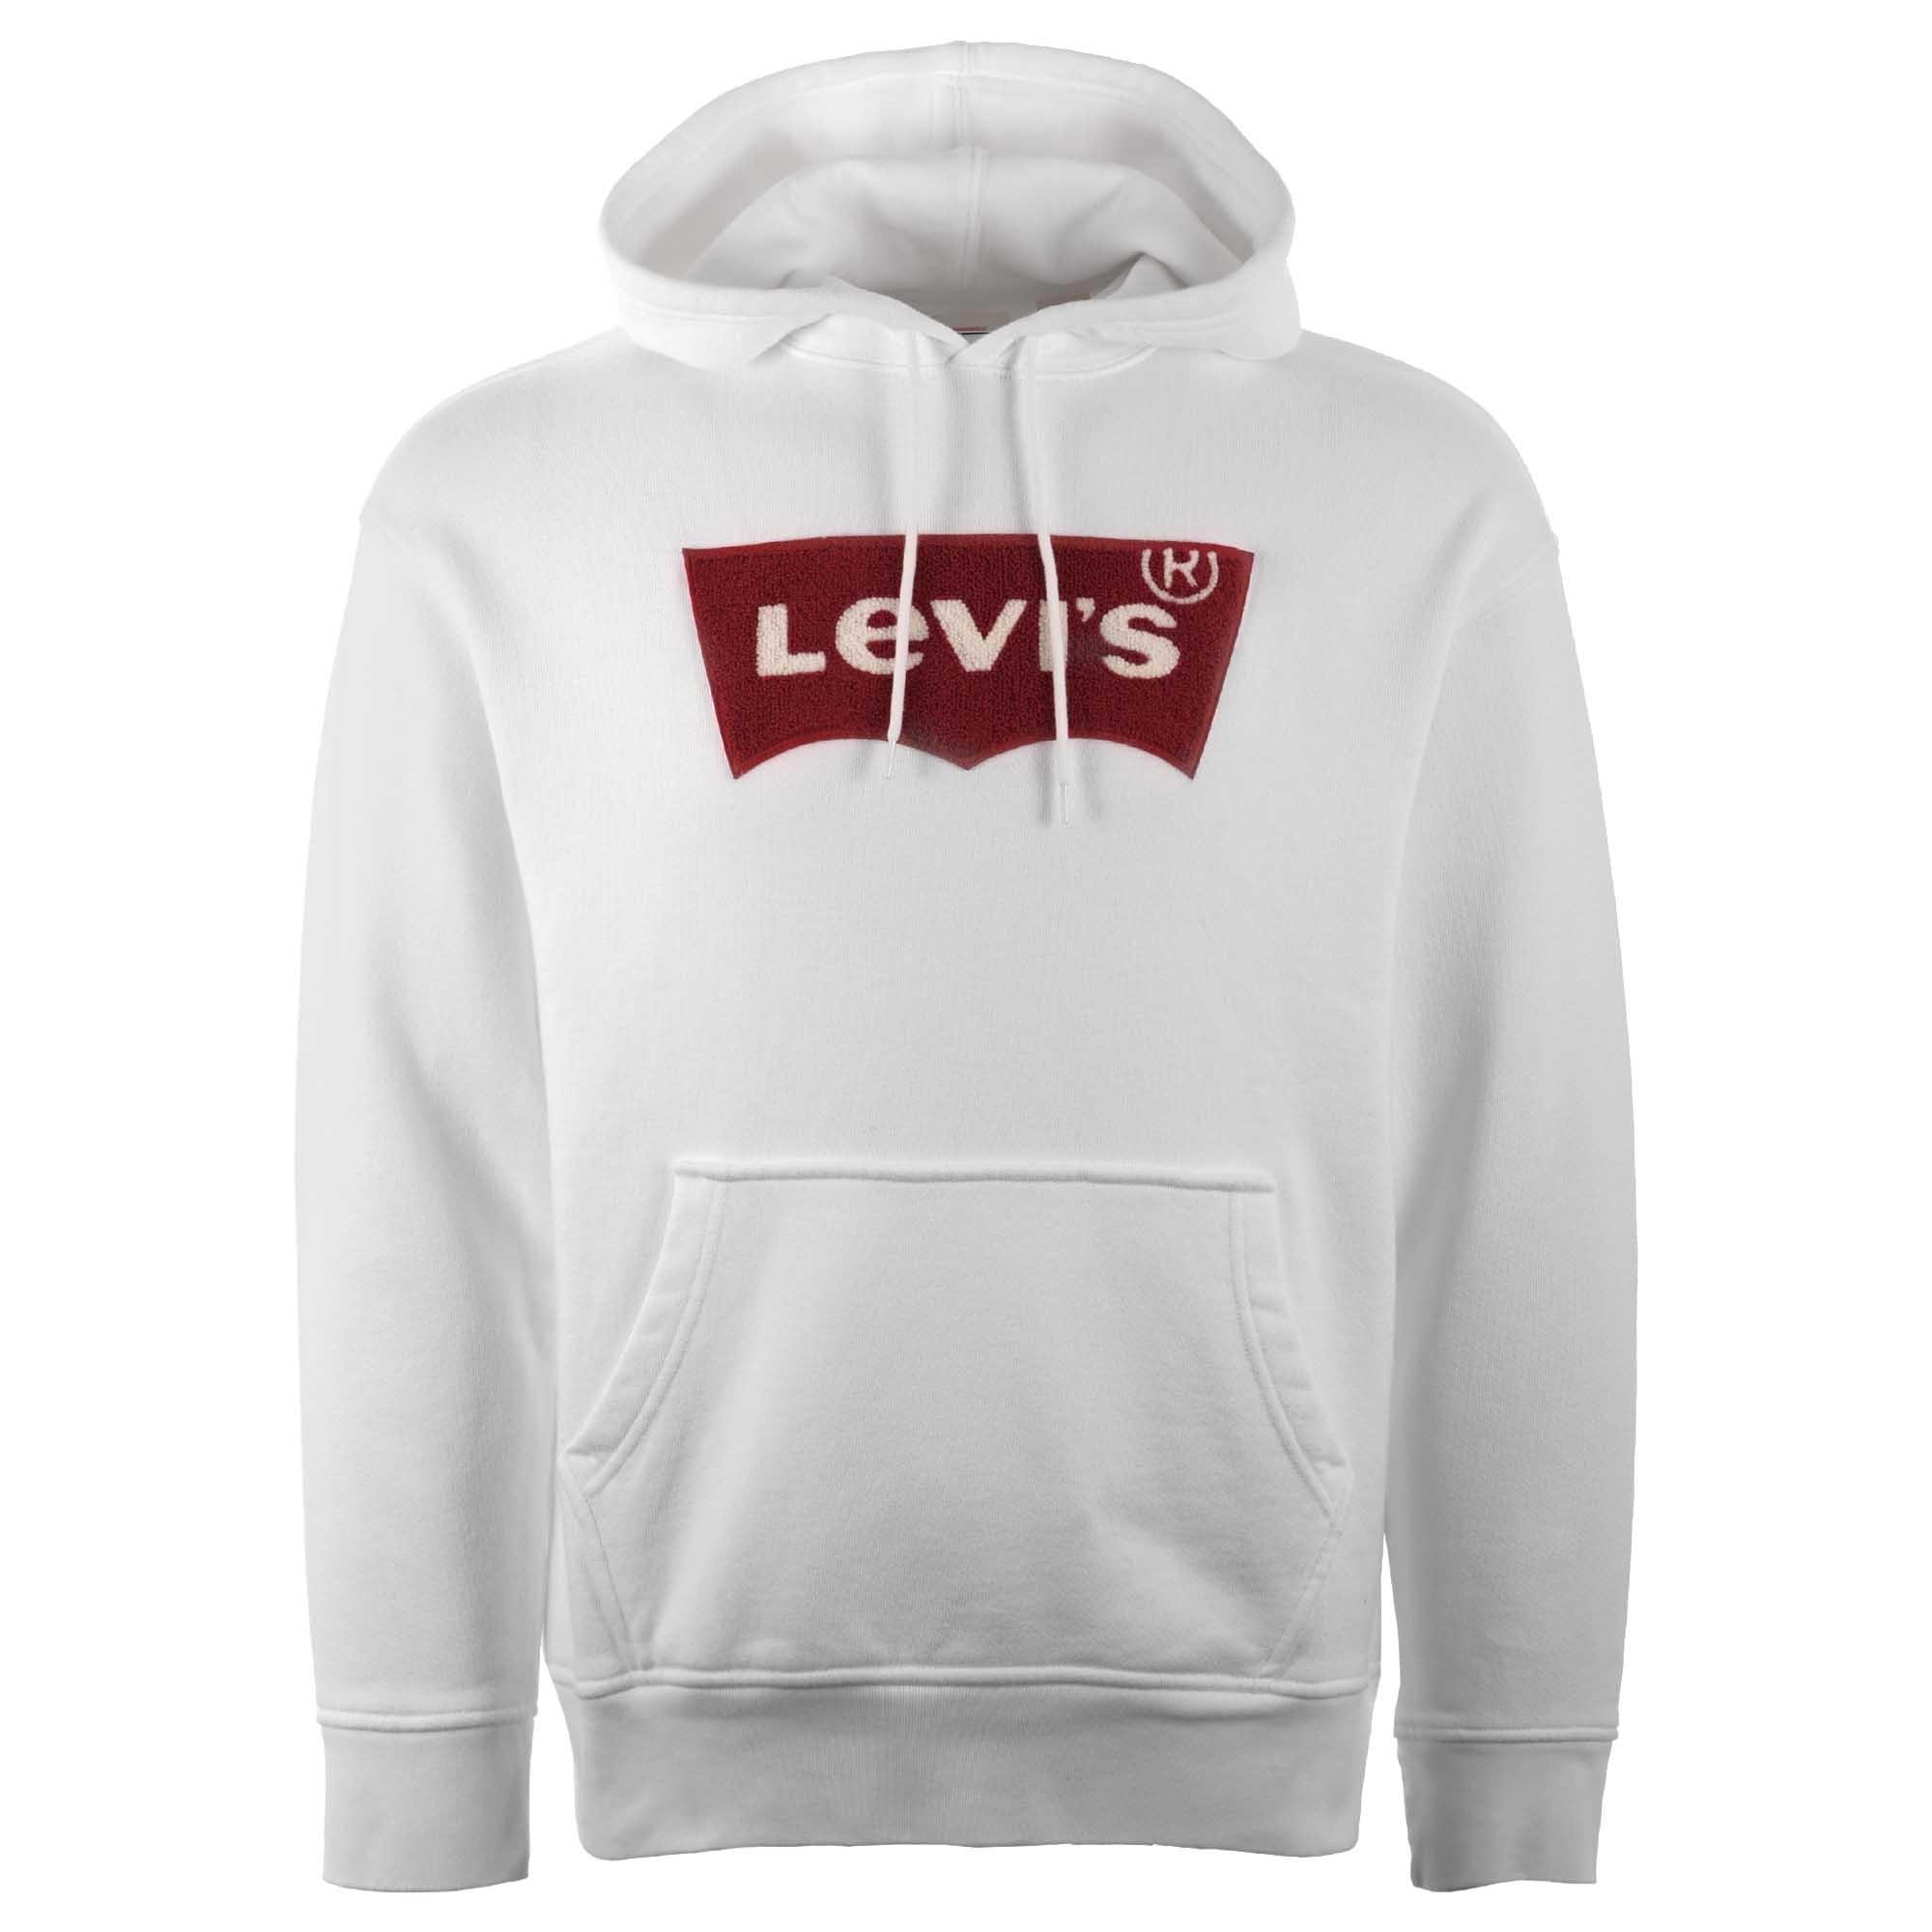 white hoodie levis